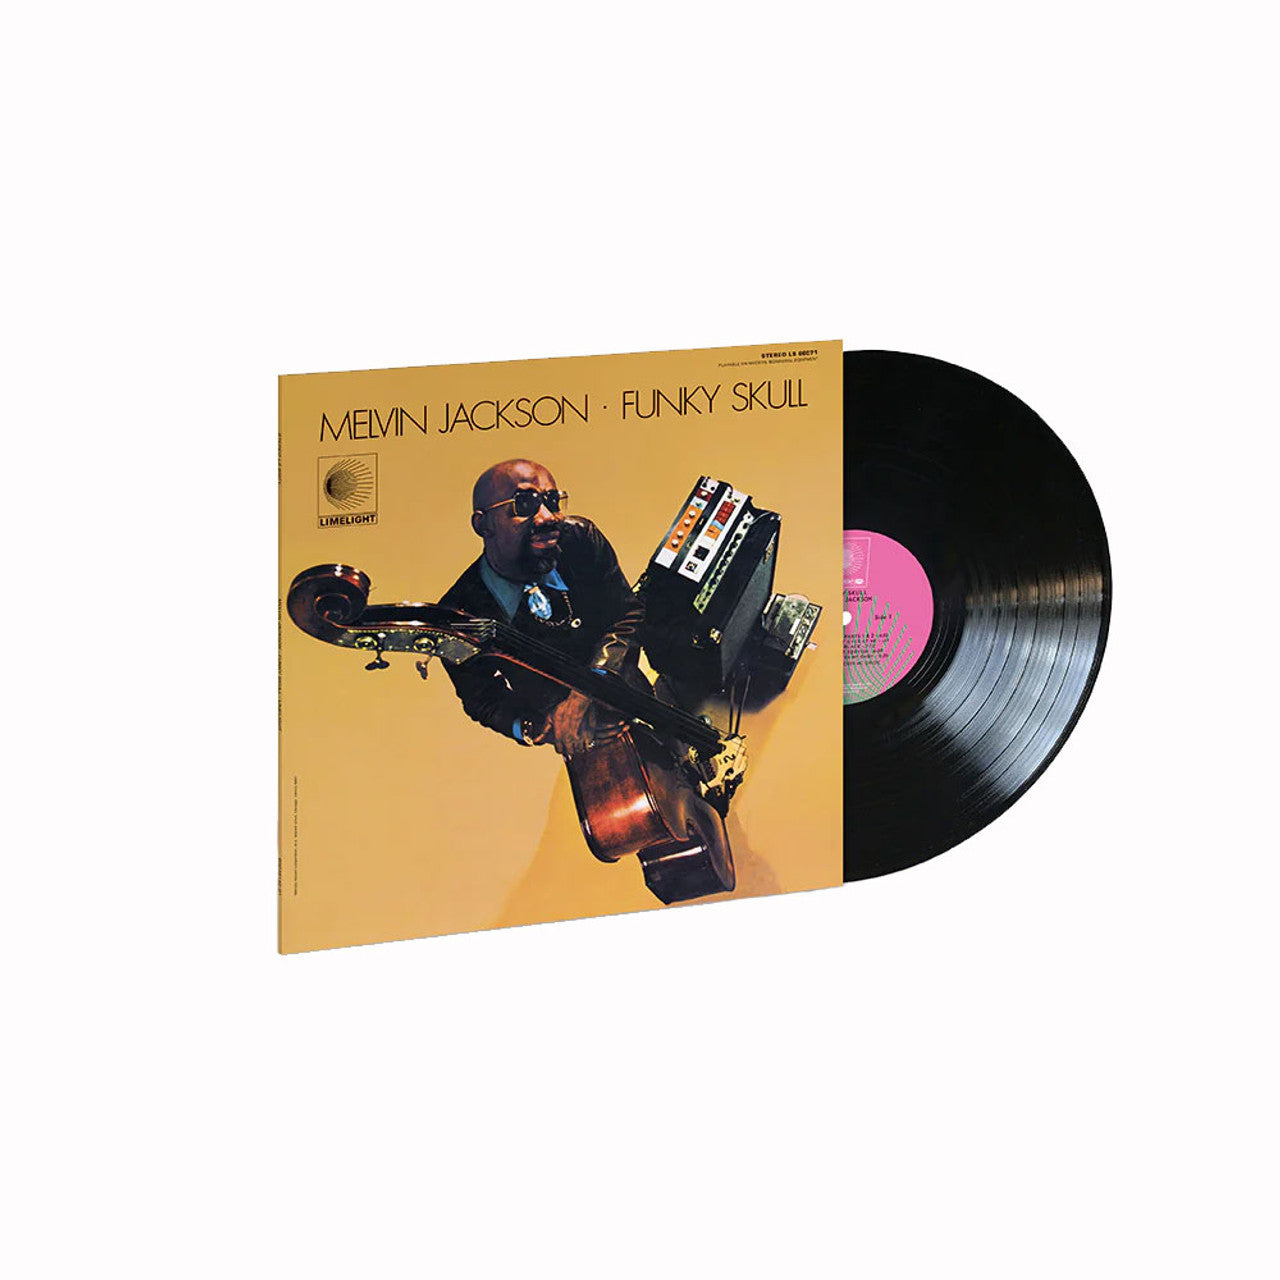 (Pre Order) Melvin Jackson - Funky Skull - Verve By Request LP